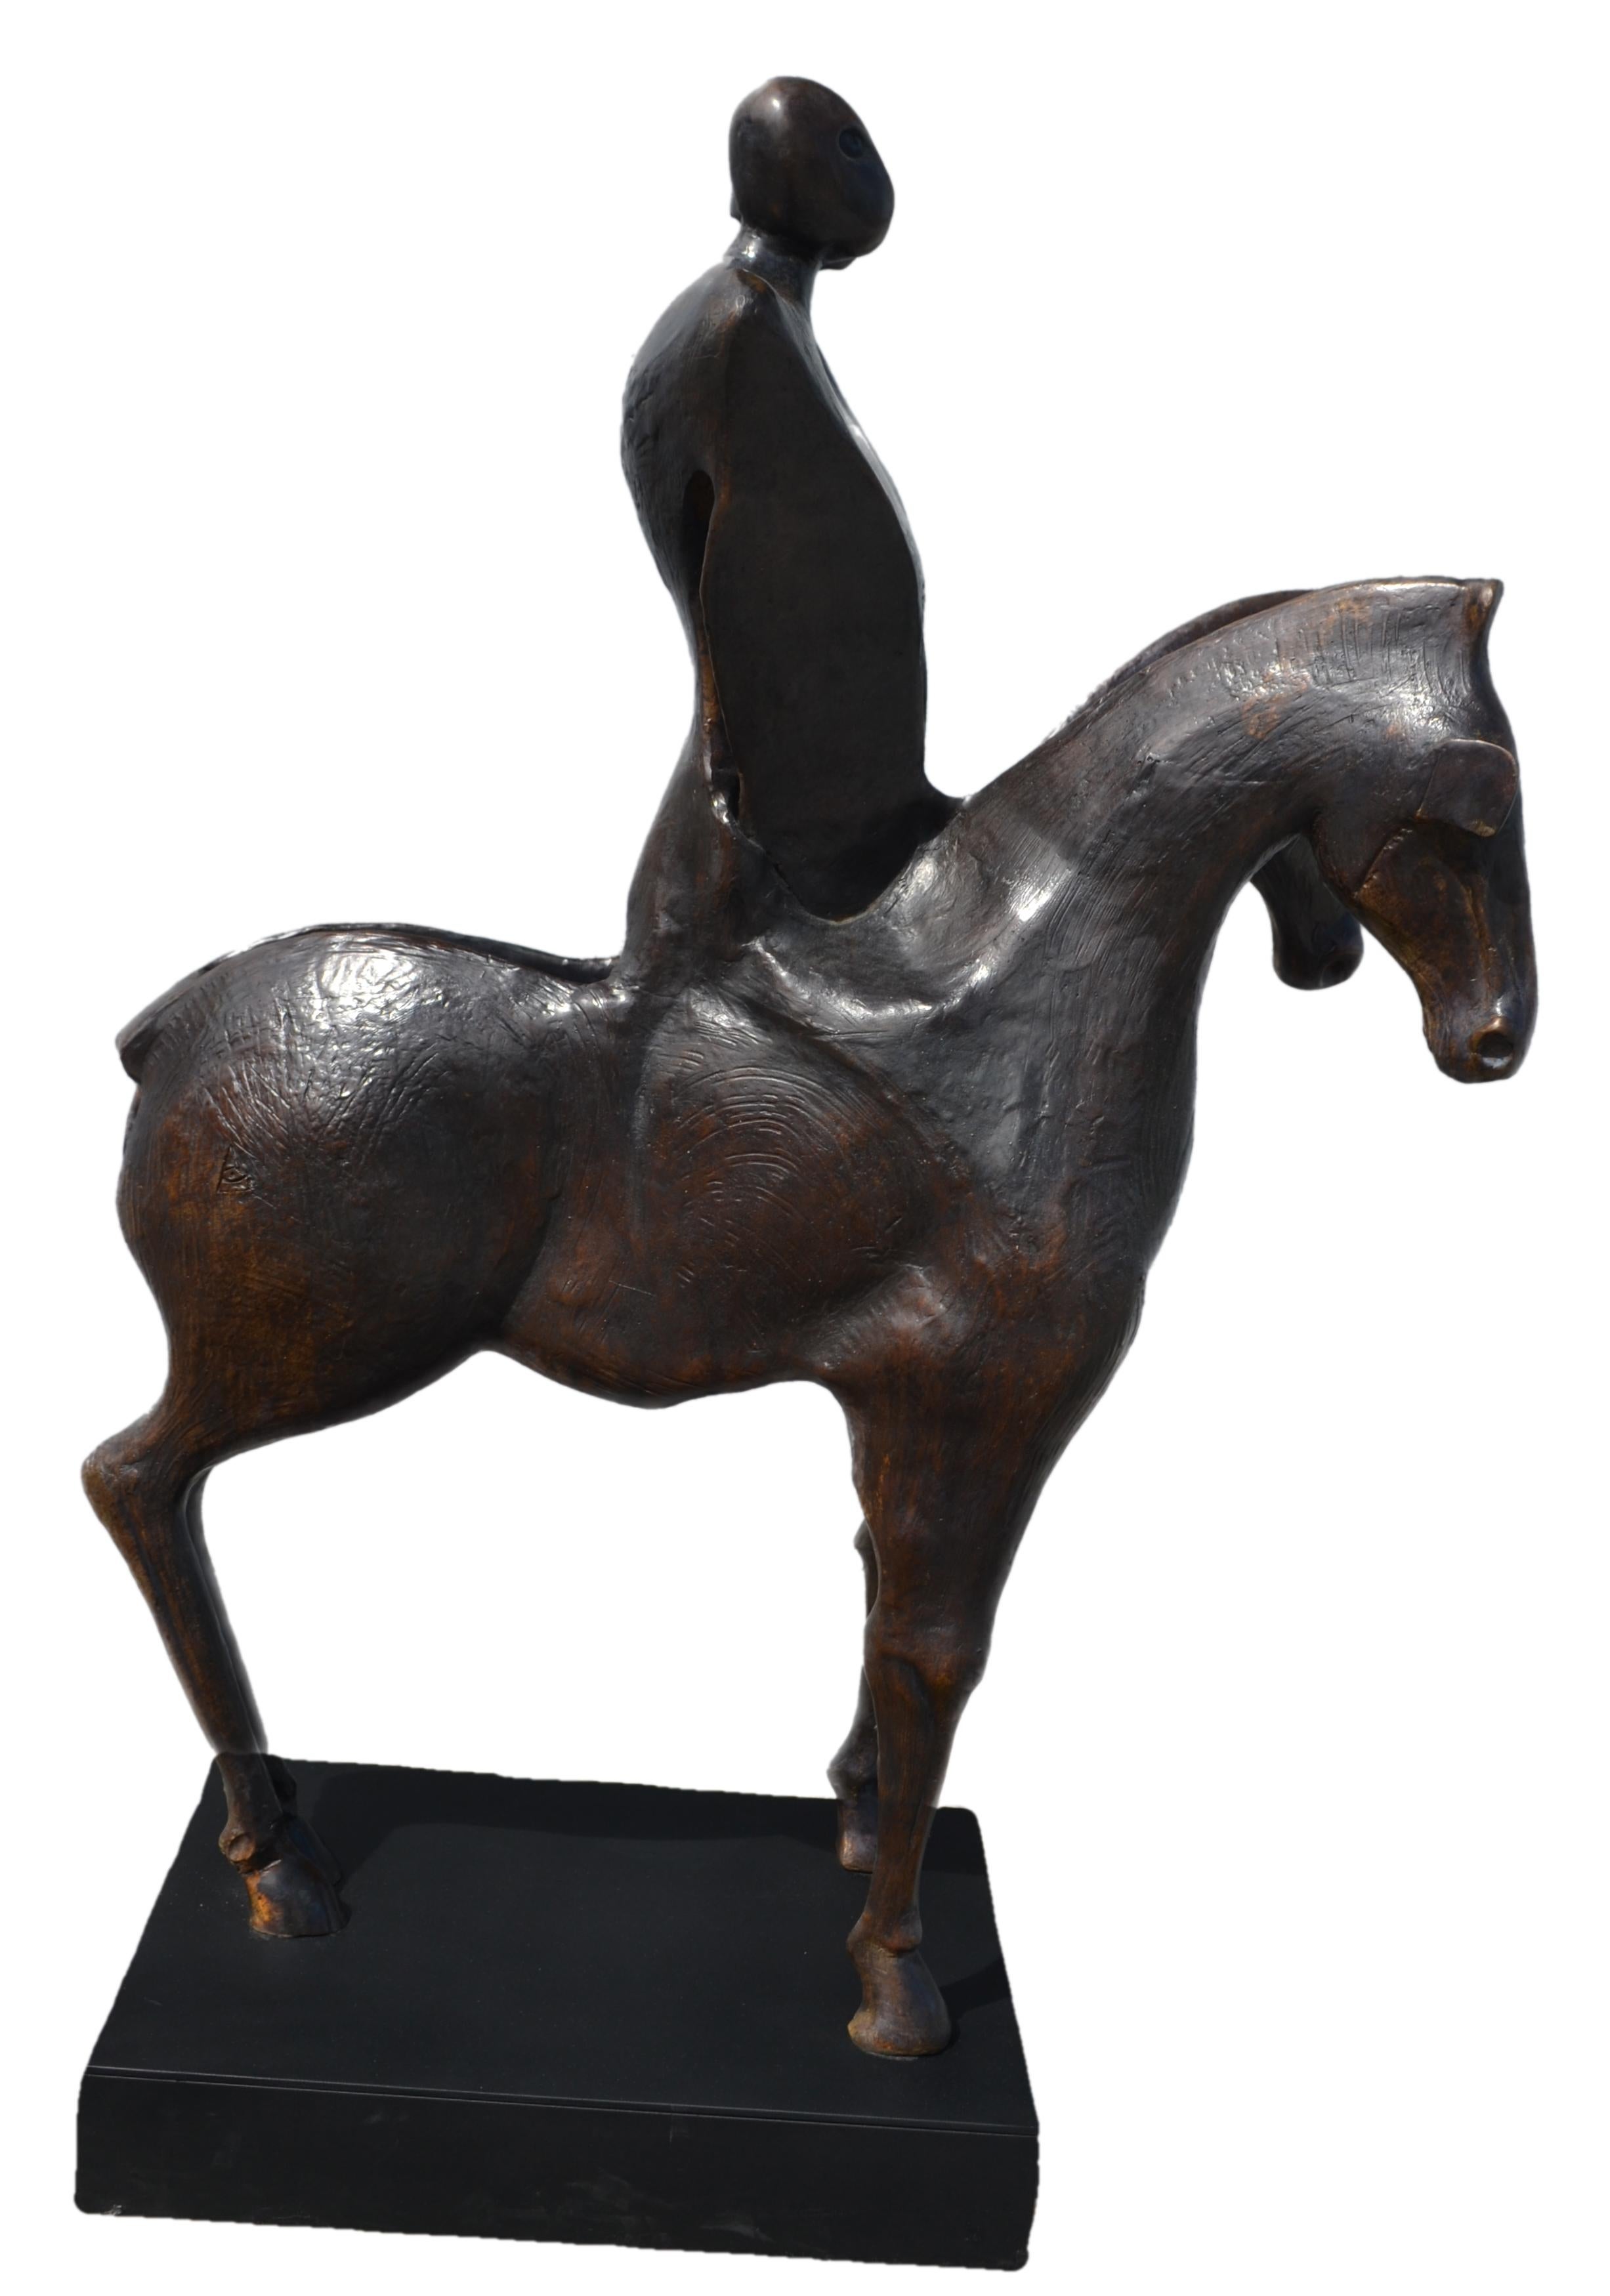 Jorge Segu, Falsos Heroes en Caballos Mticos, bronze, édition 1/7, 2010-2013 - Or Figurative Sculpture par Jorge Seguí 